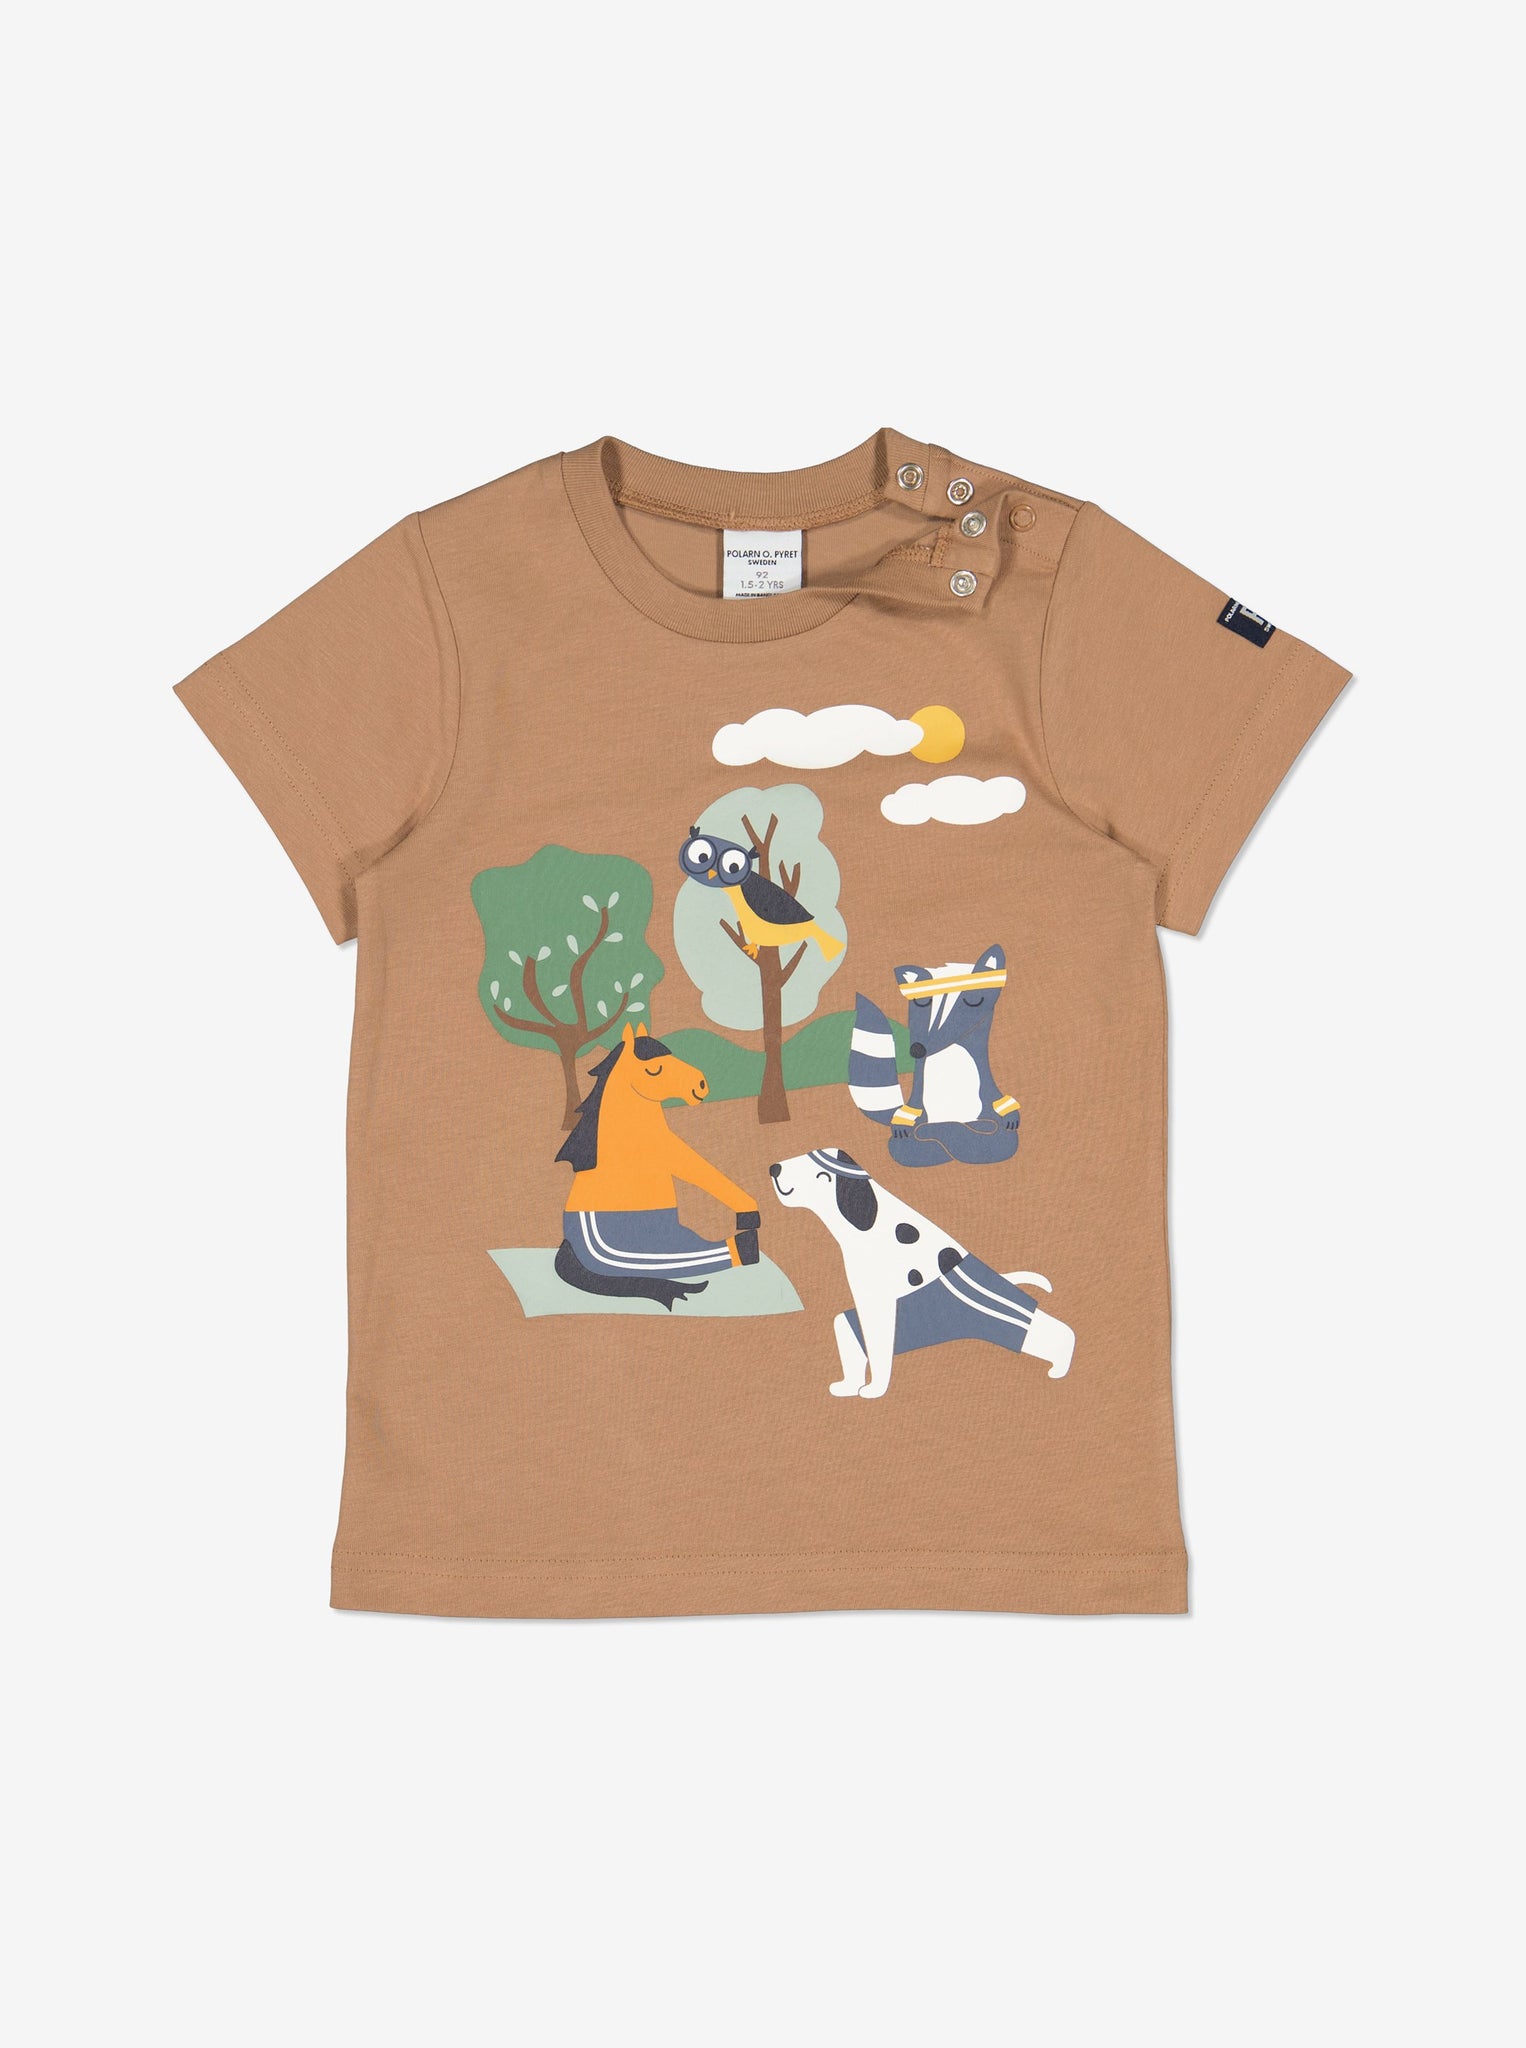  Organic Brown Animal Print Kids T-Shirt from Polarn O. Pyret Kidswear. Made with 100% organic cotton.